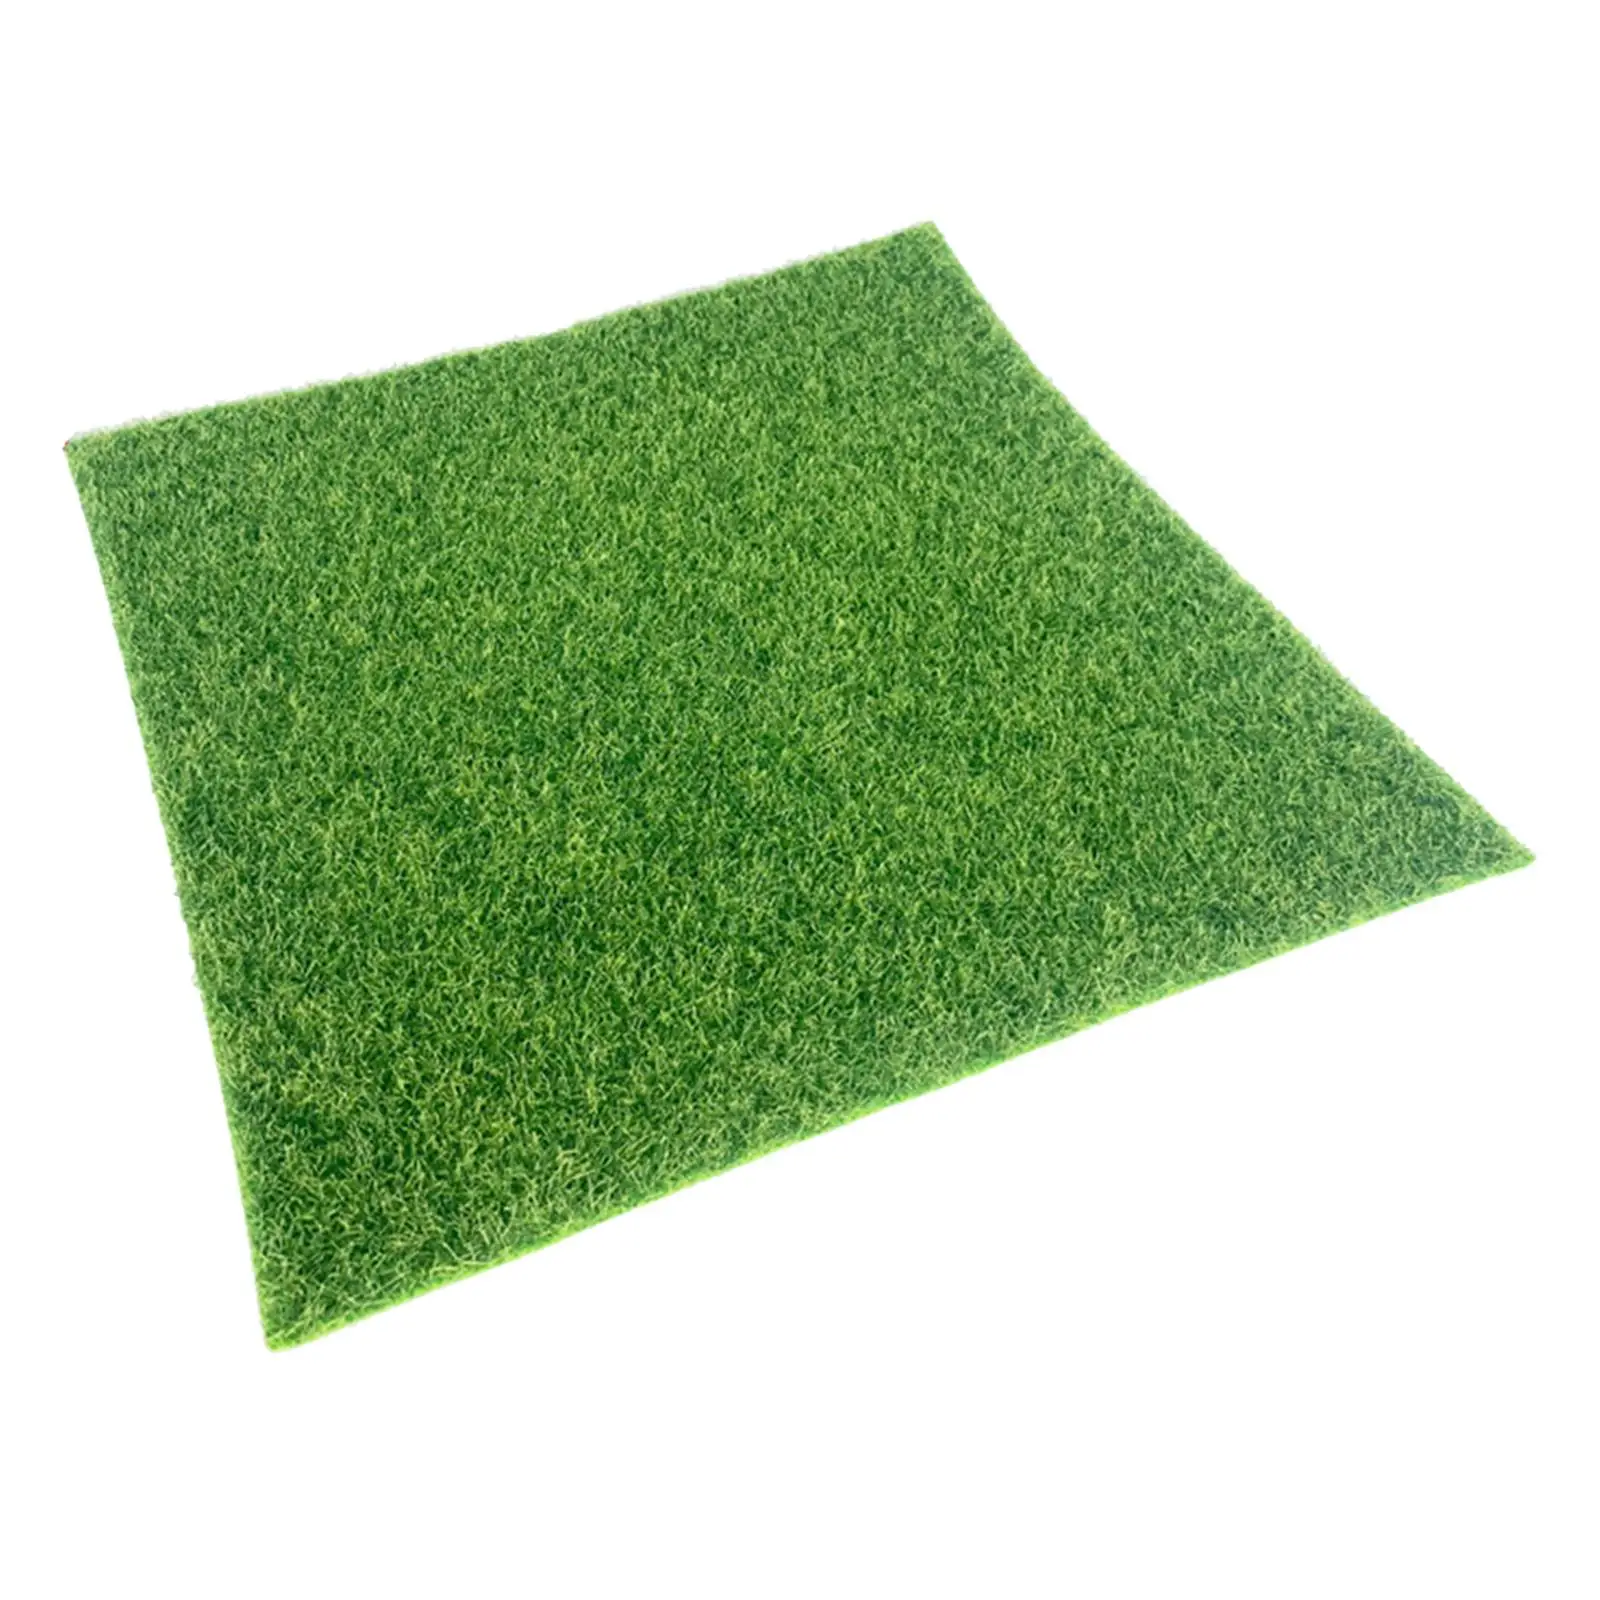 15x15cm Grass Mat Dog Training Area Artificial Carpet Turf Lawn for Patio Floor Balcony DIY Micro Landscape Indoor